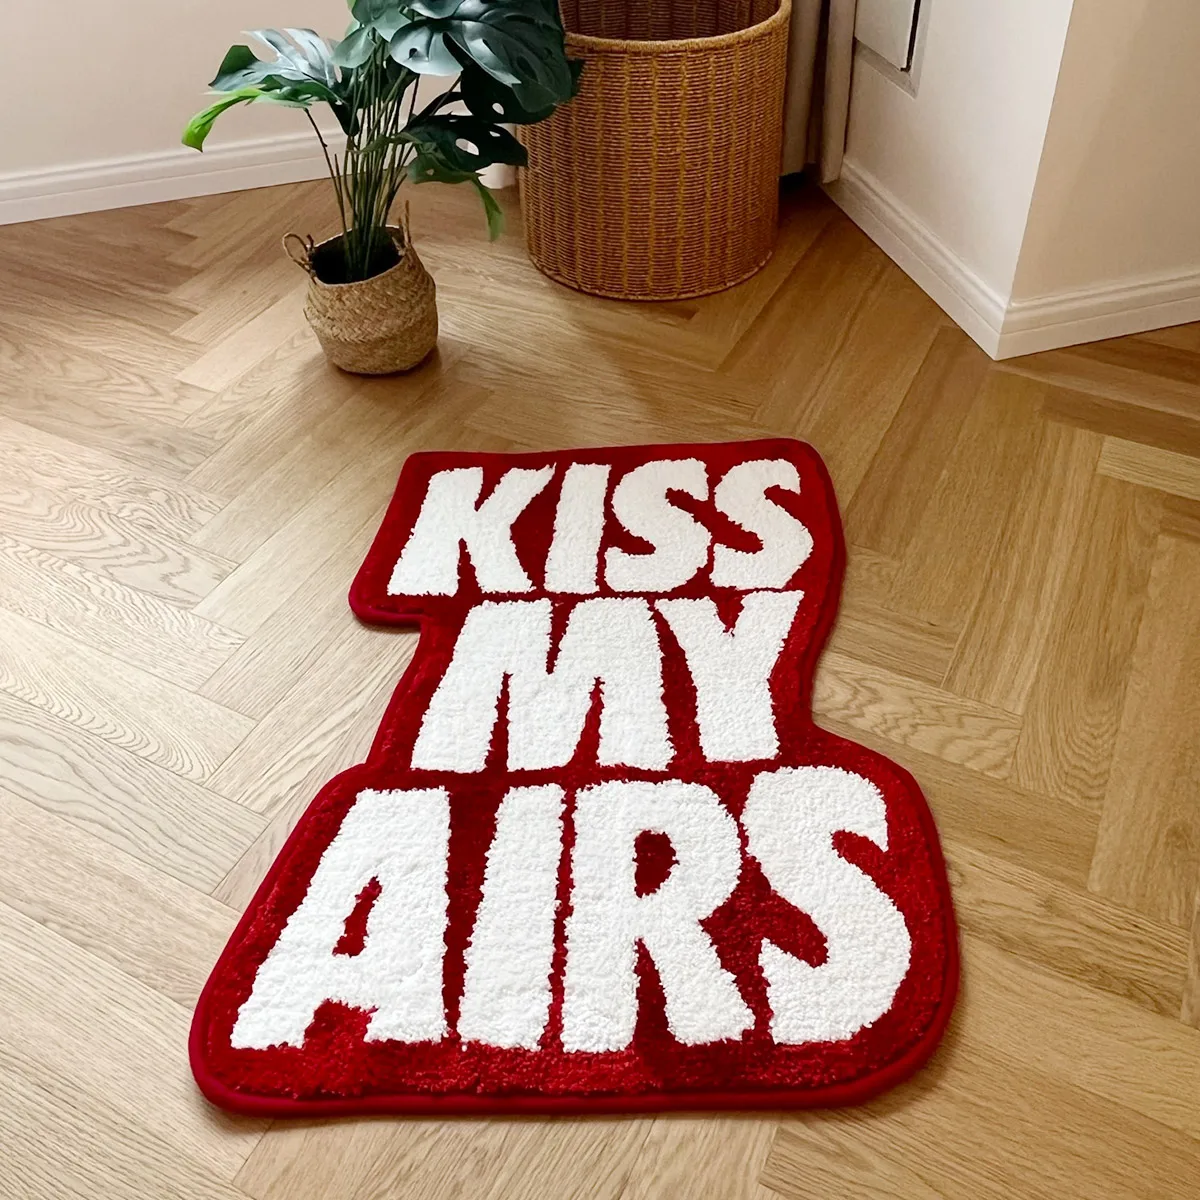 Kiss My Airs Handmade Rug Tufted Plush Carpet Rug Purely Handmade Soft Suitable for Room Decor Fluffy Carpets Bedroom Bathroom